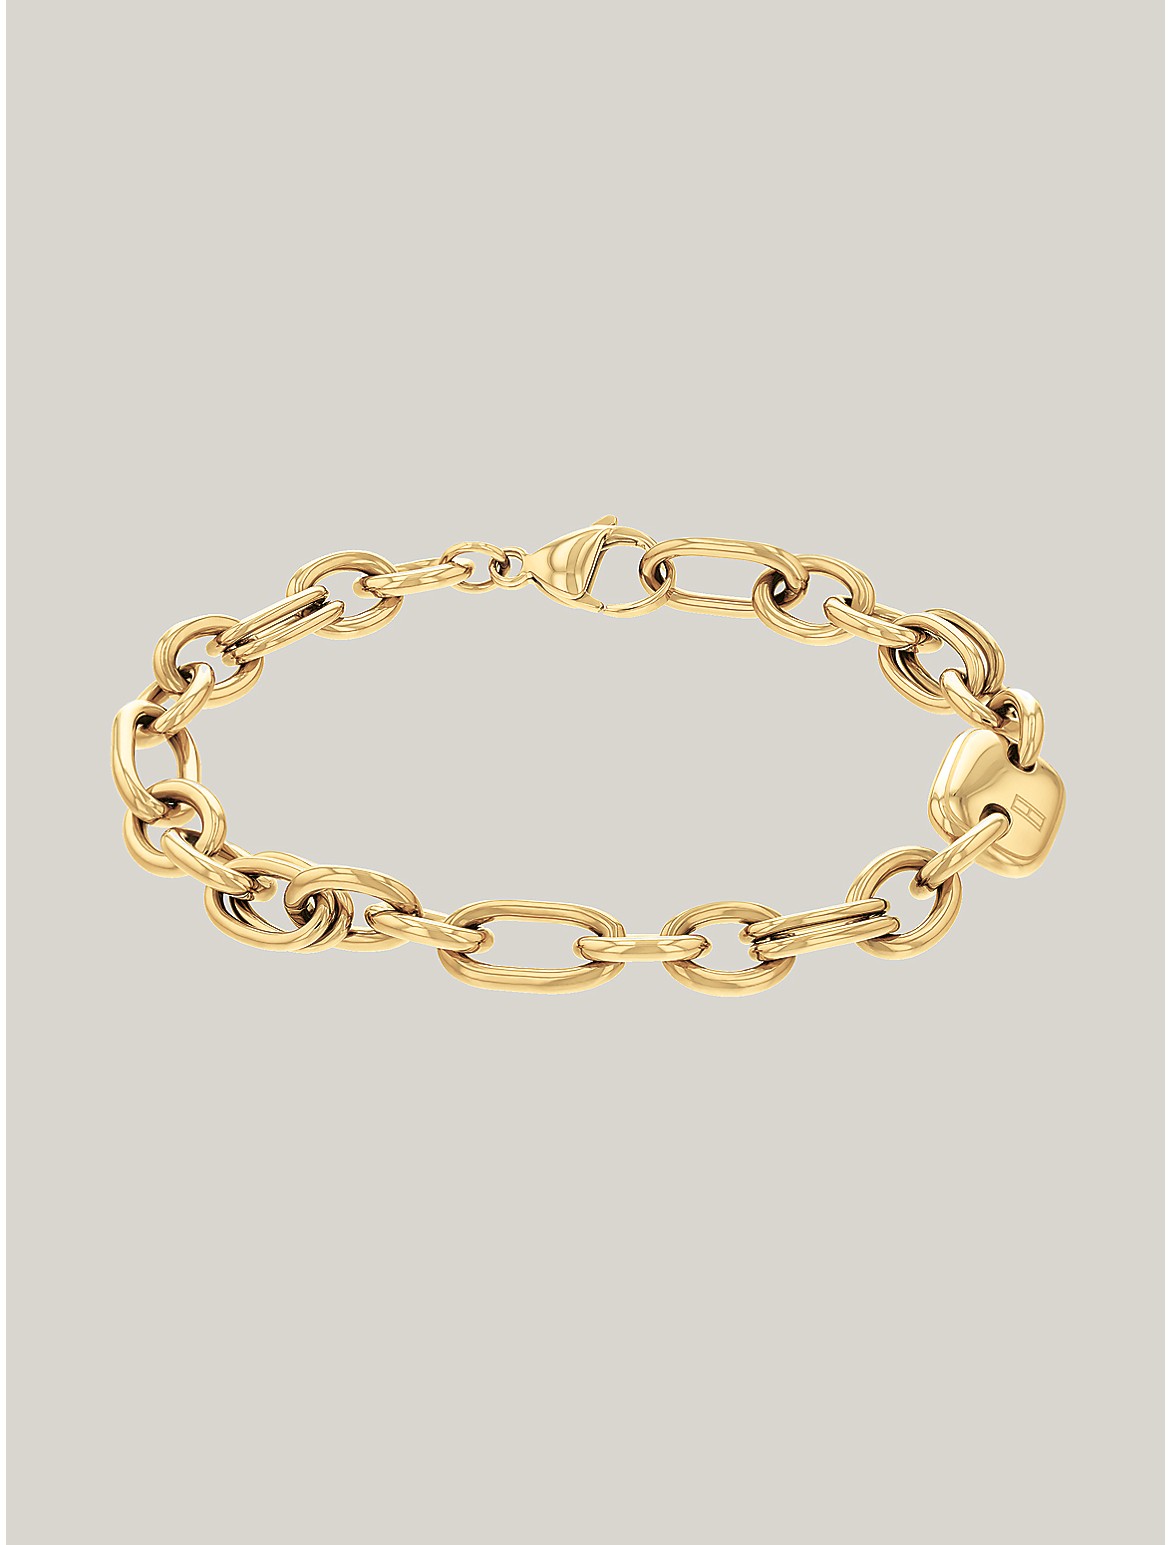 Tommy Hilfiger Women's Mixed Chain Link Gold-Tone Bracelet - Metallic